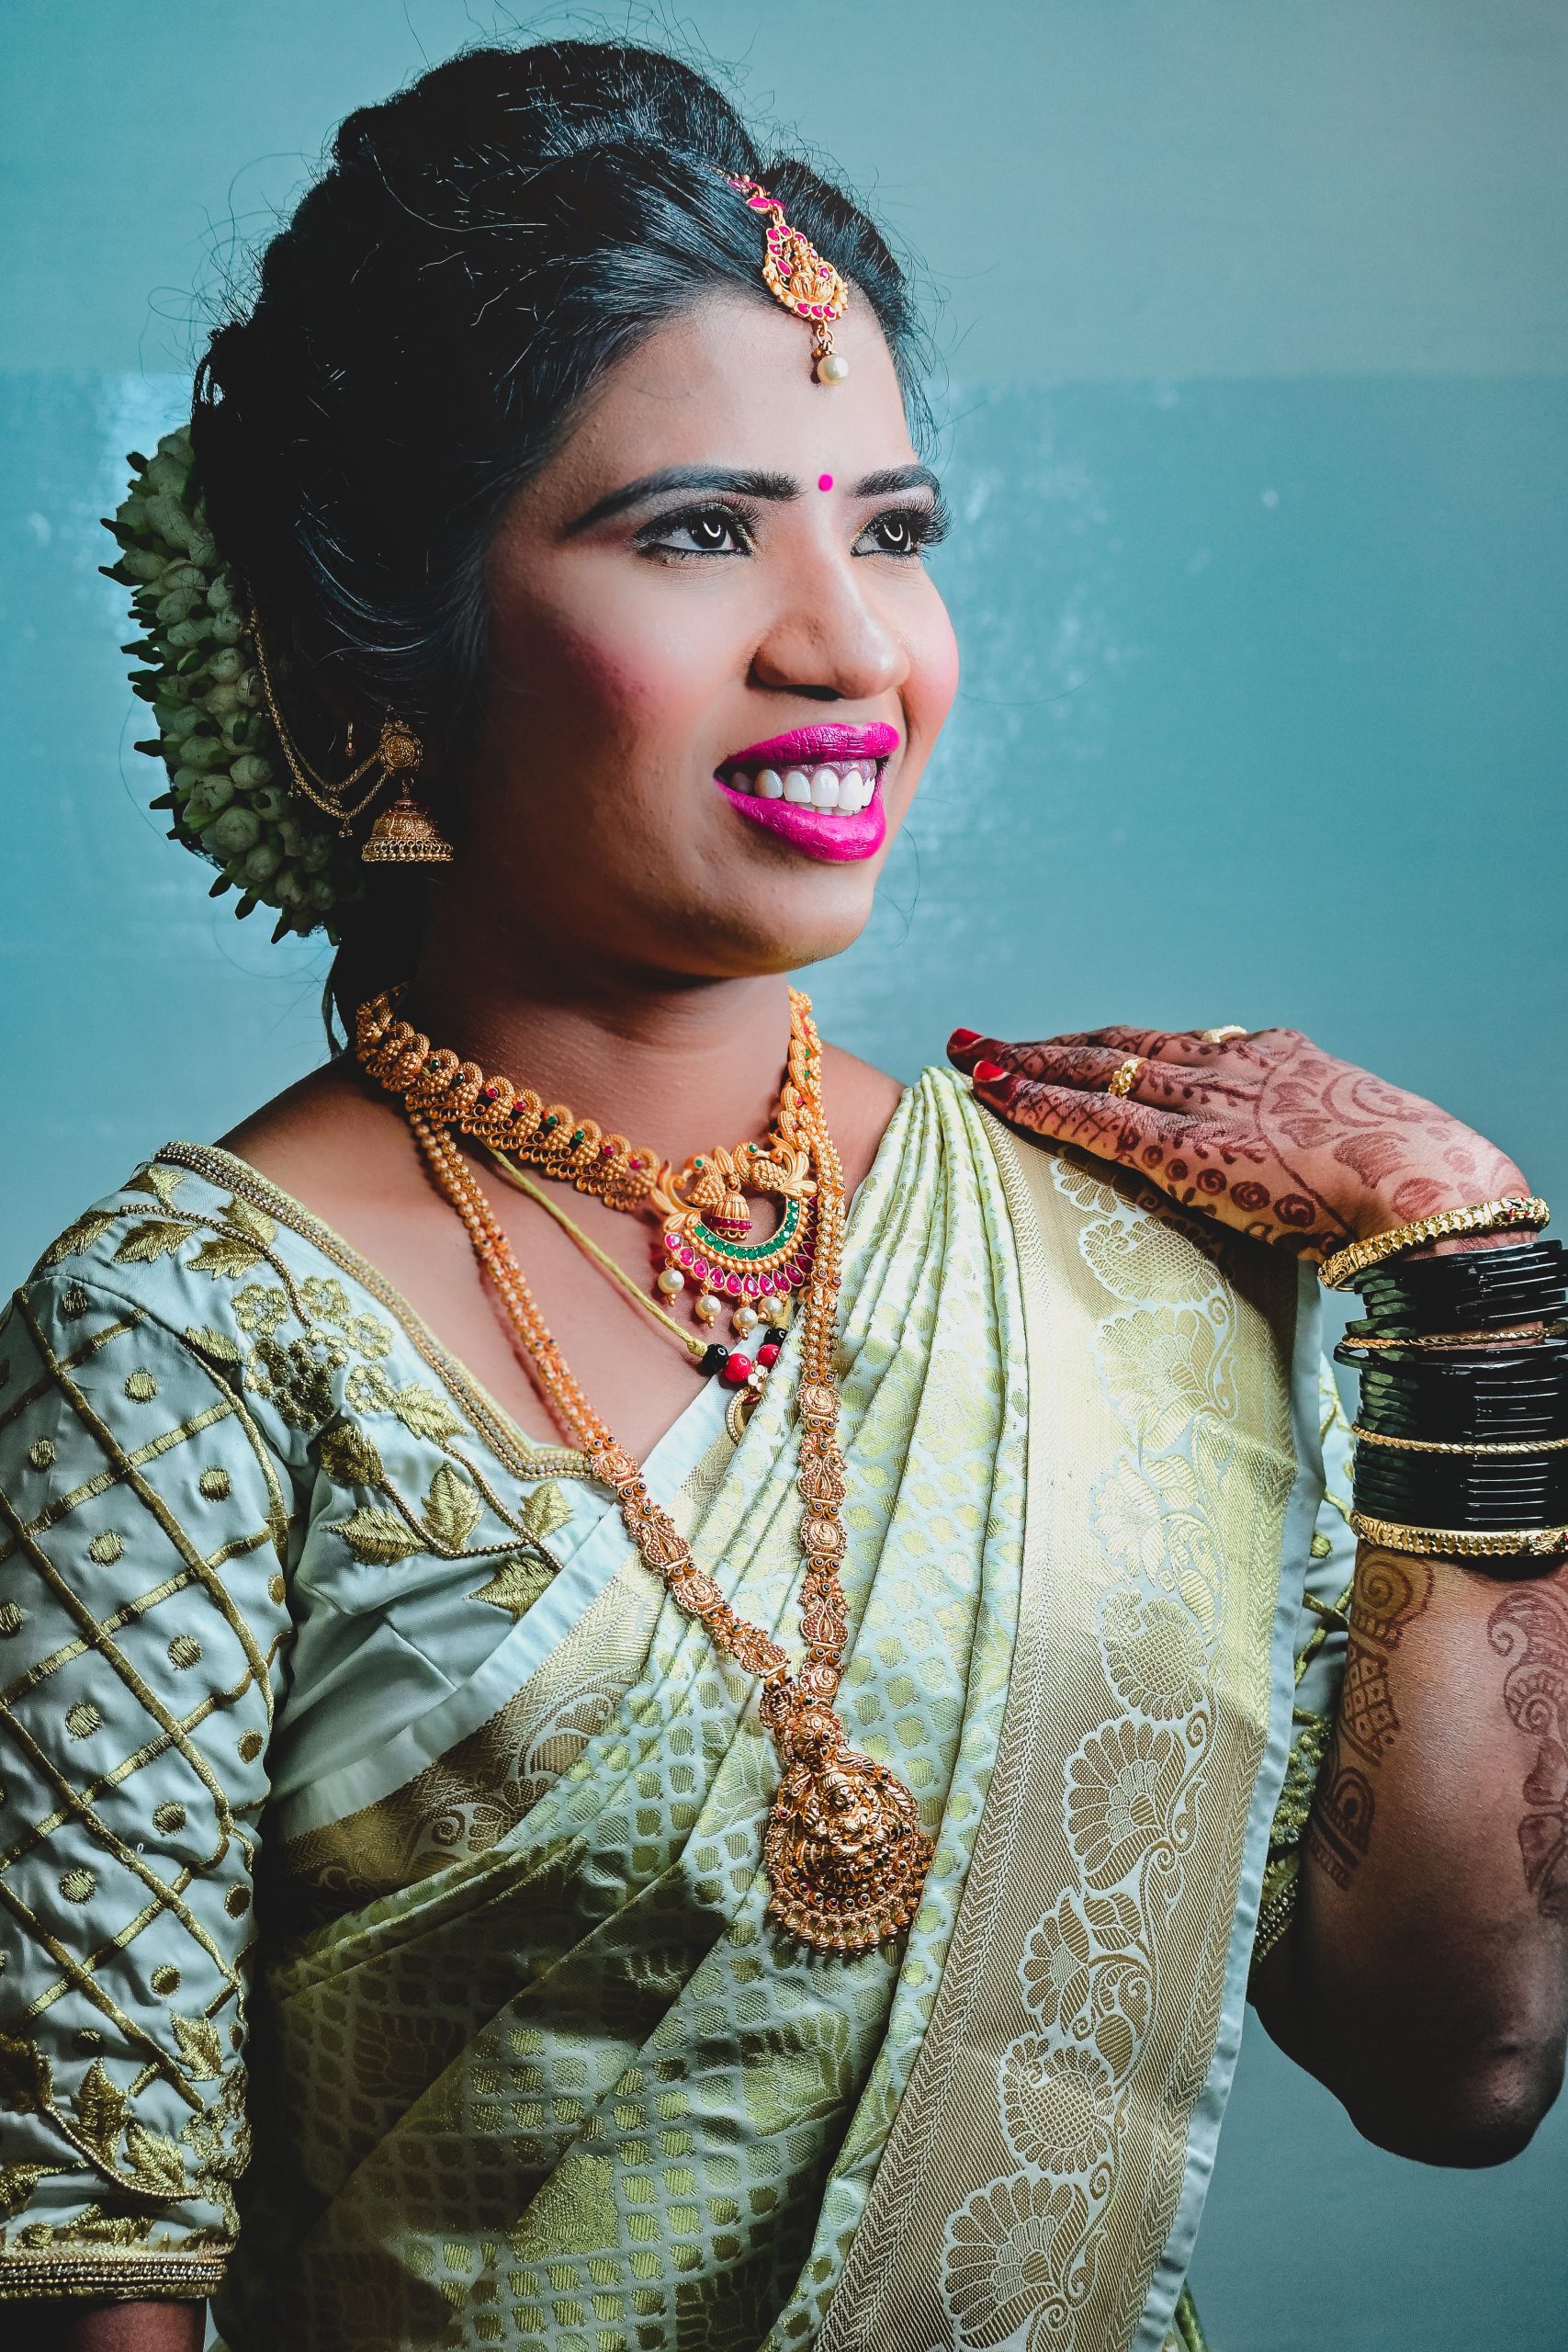 An Indian woman